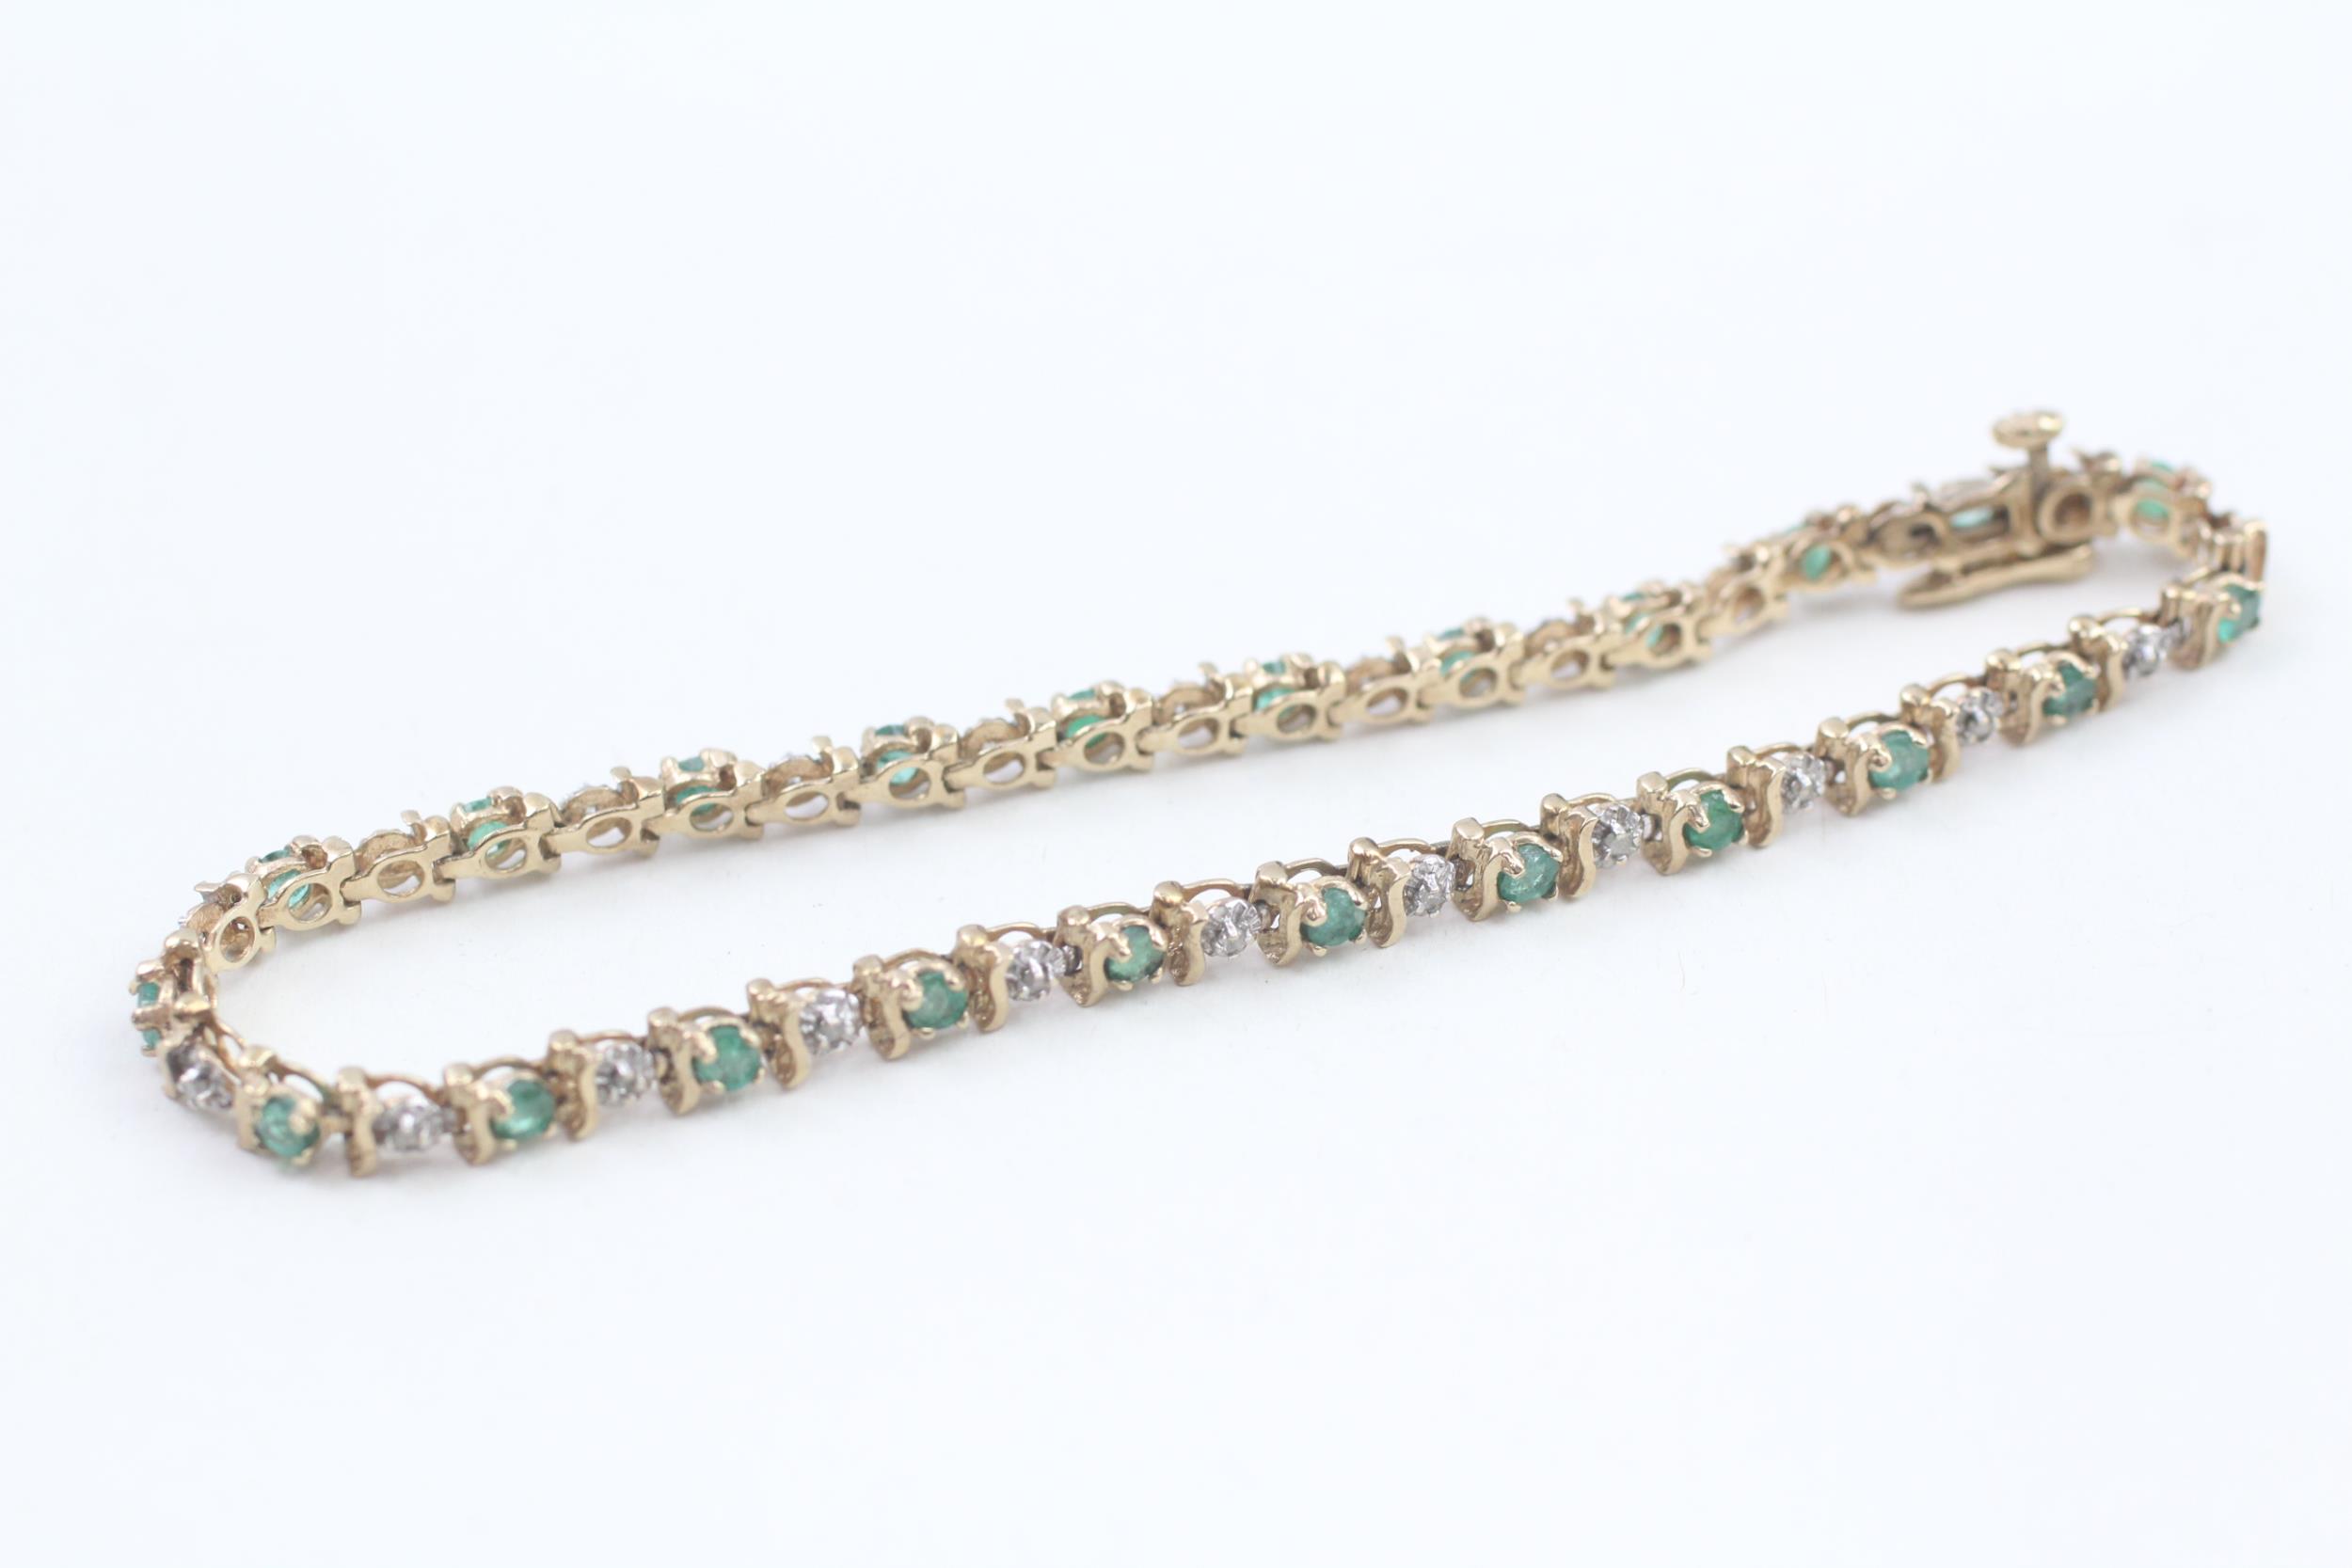 9ct gold emerald & diamond bracelet (6.8g) - Image 4 of 4